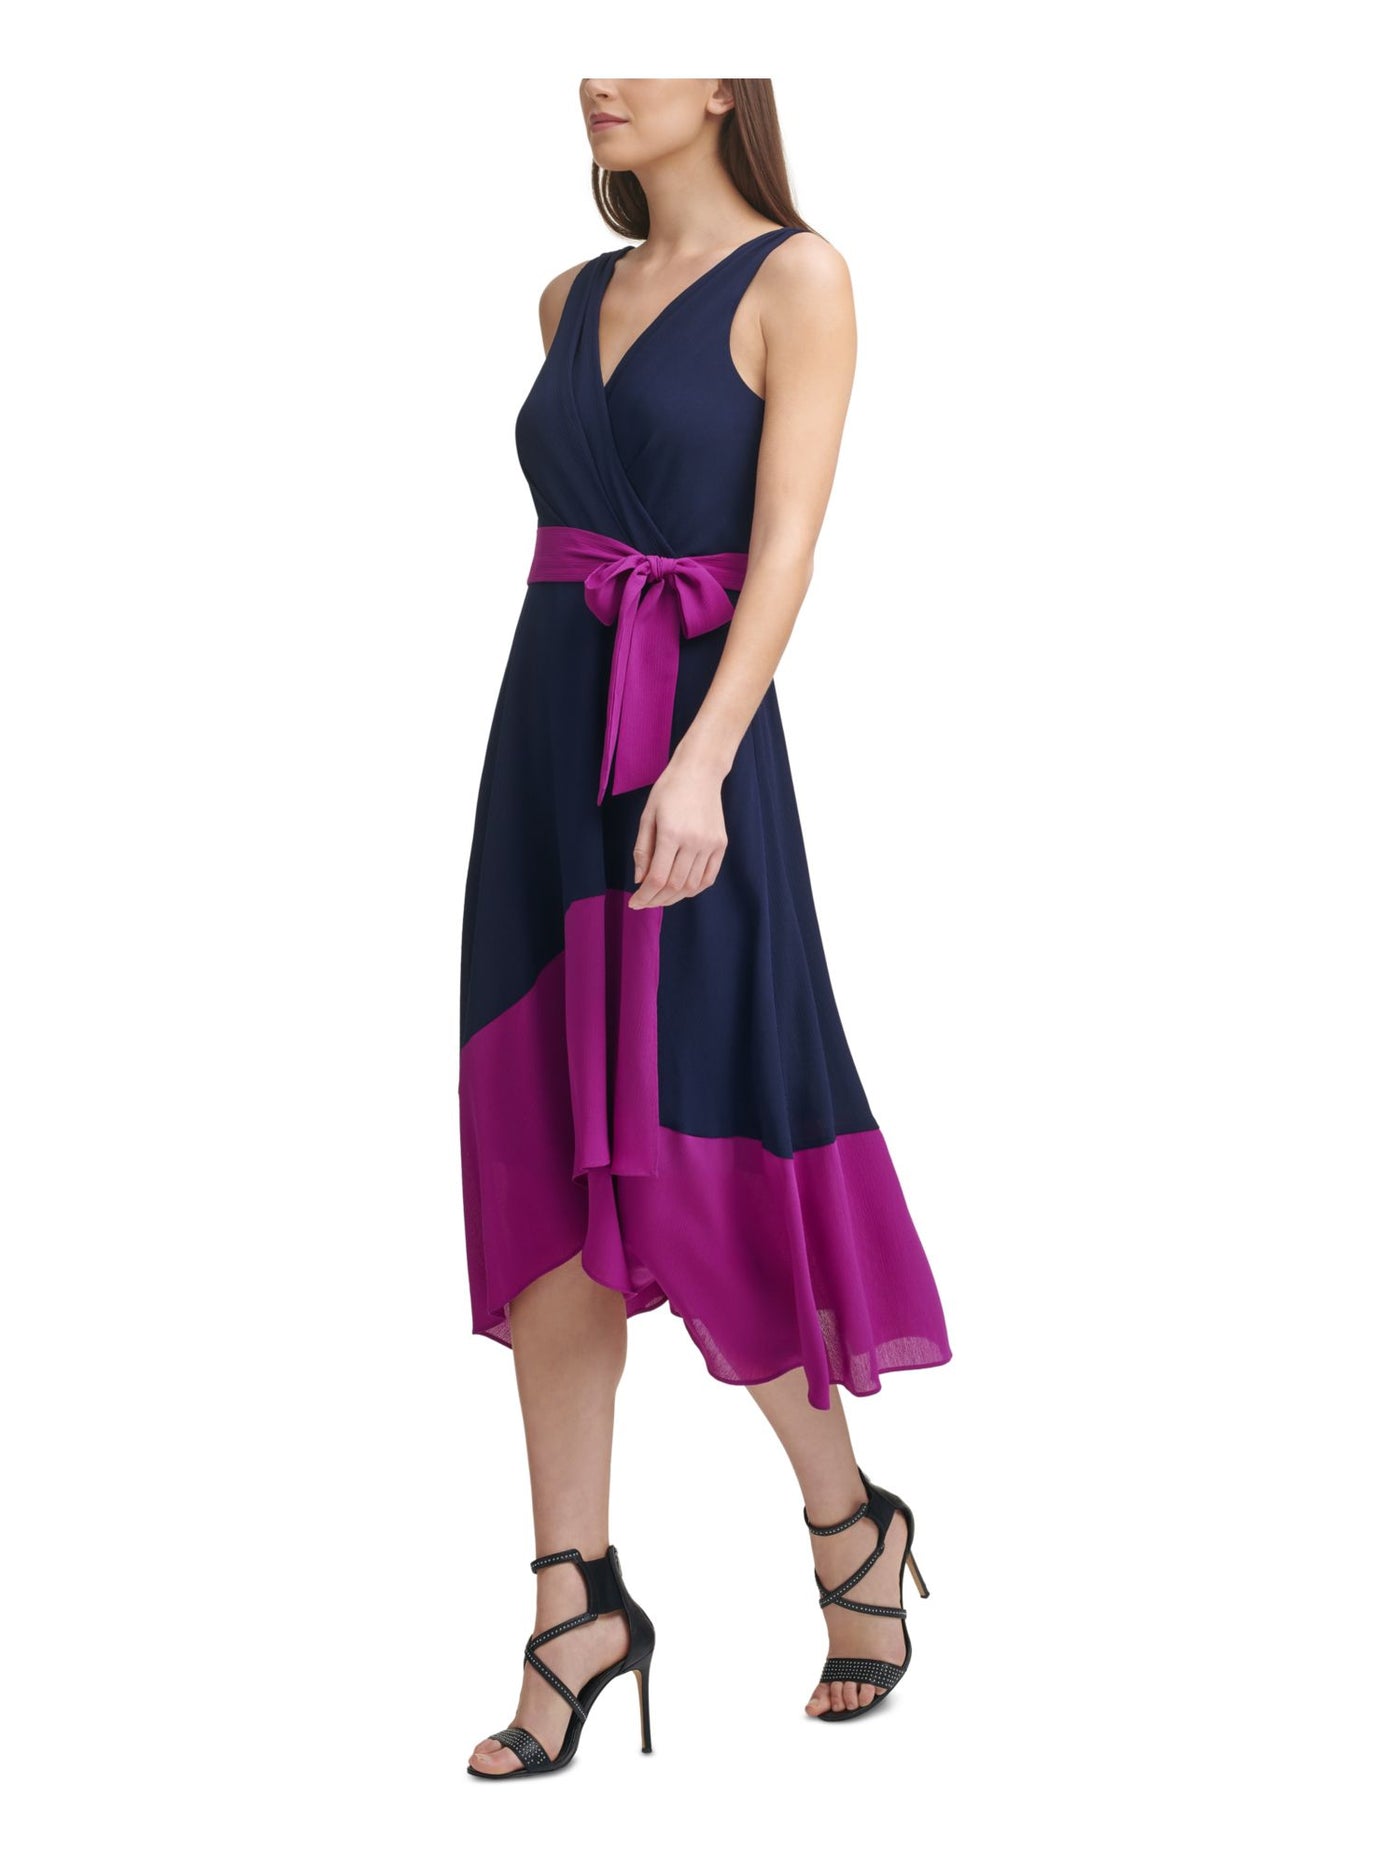 DKNY Womens Purple Zippered Self-tie Belt Color Block Sleeveless Surplice Neckline Midi Wrap Dress 2